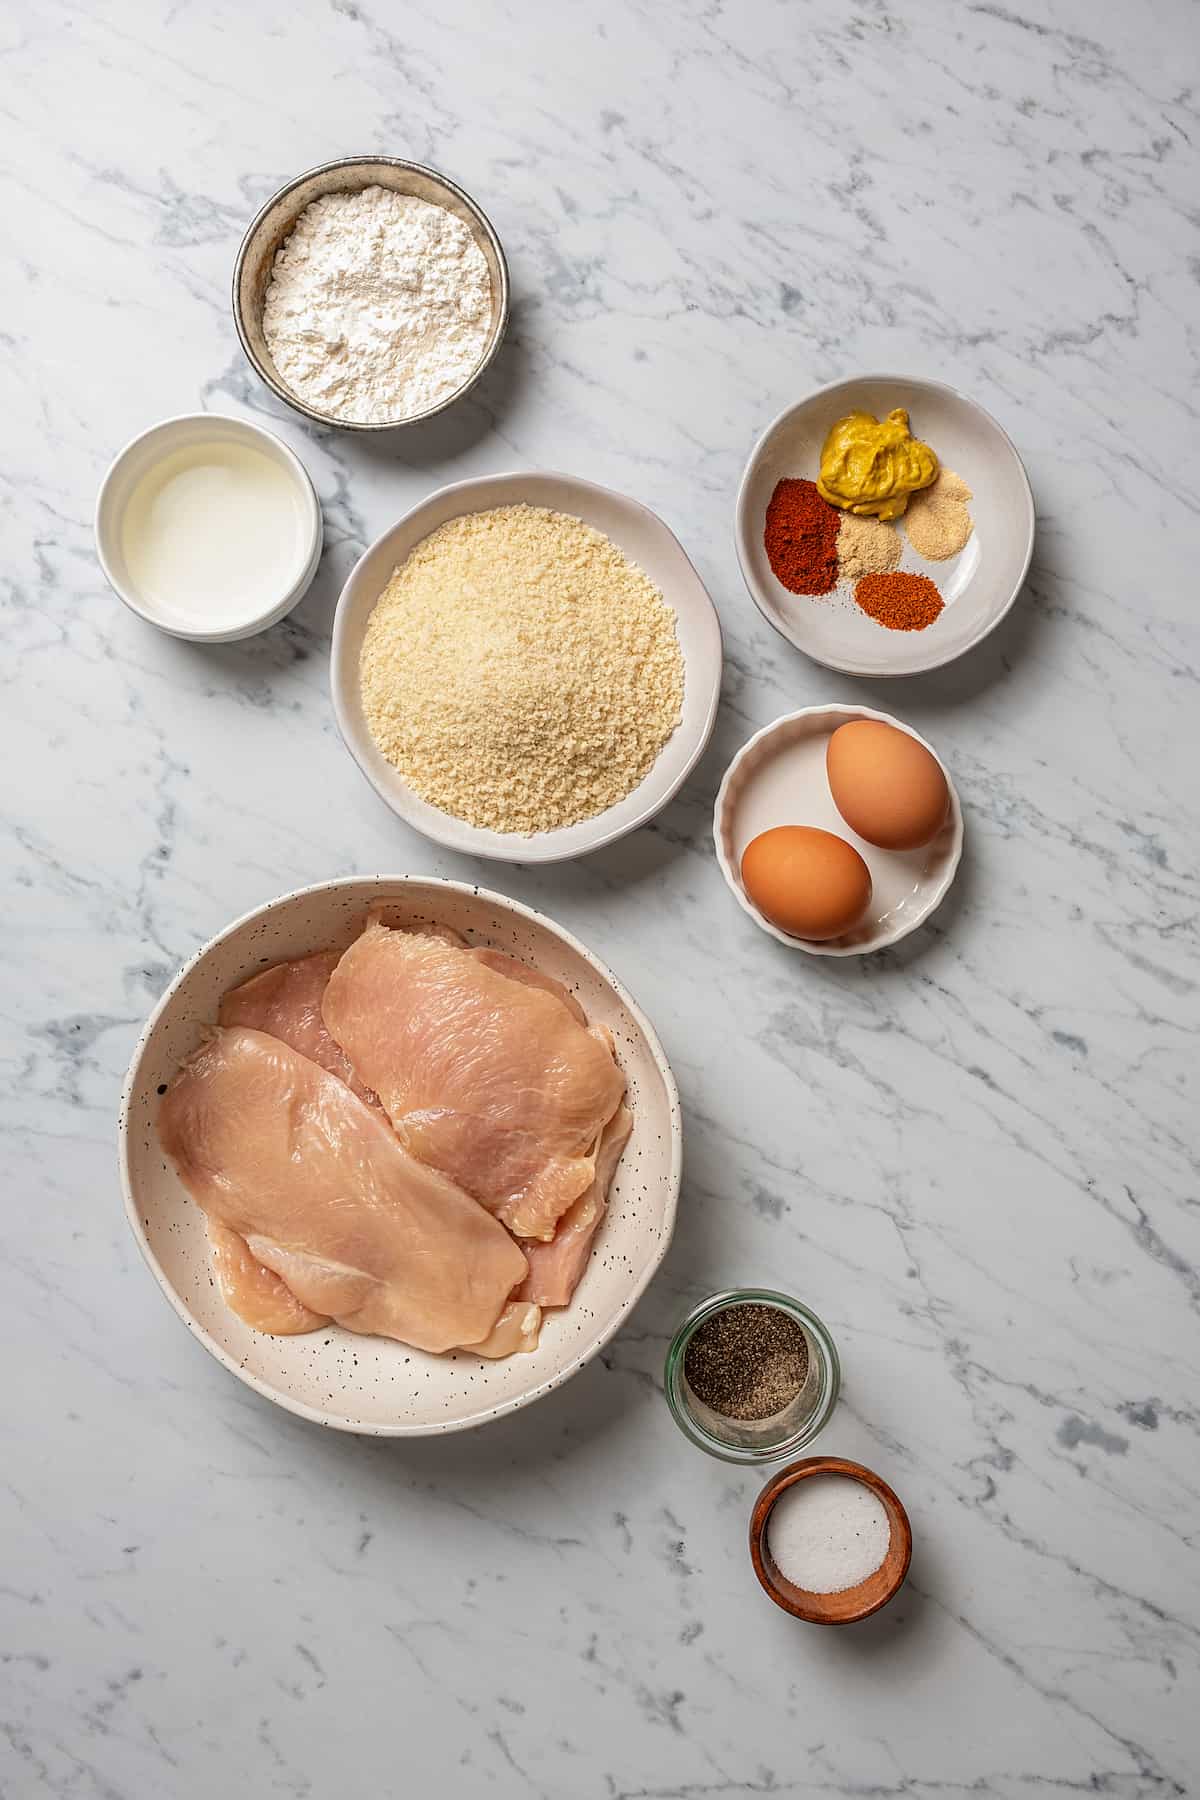 From top: flour, seasonings, oil, bread crumbs, eggs, chicken cutlets, salt, and pepper.